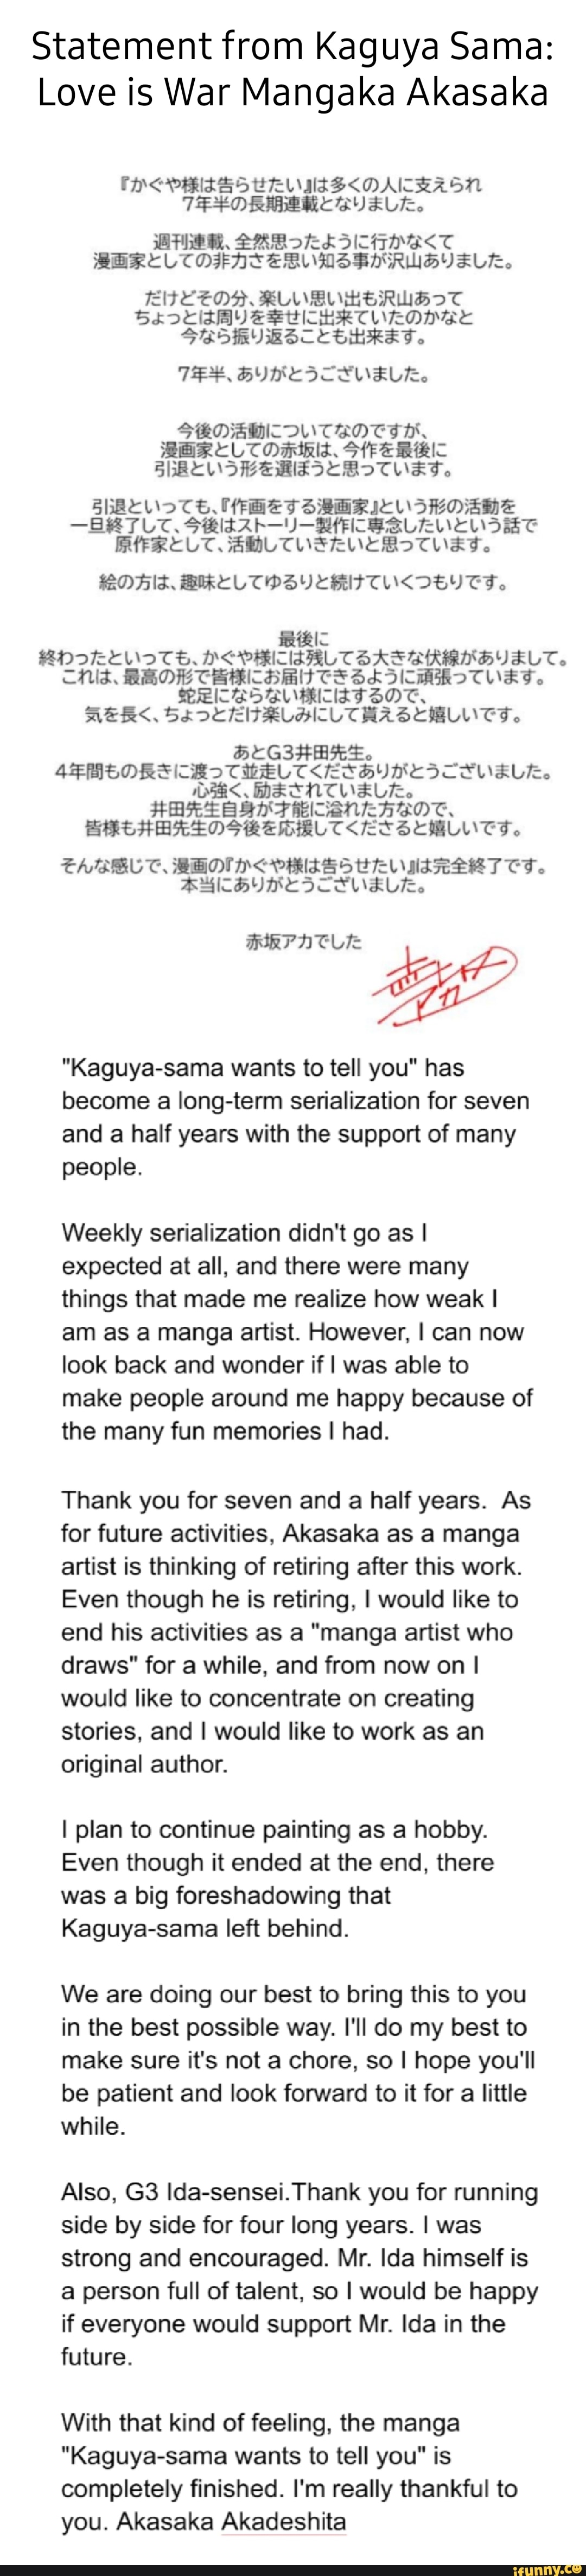 The Author of Kaguya-sama retires as an Illustrator from Manga